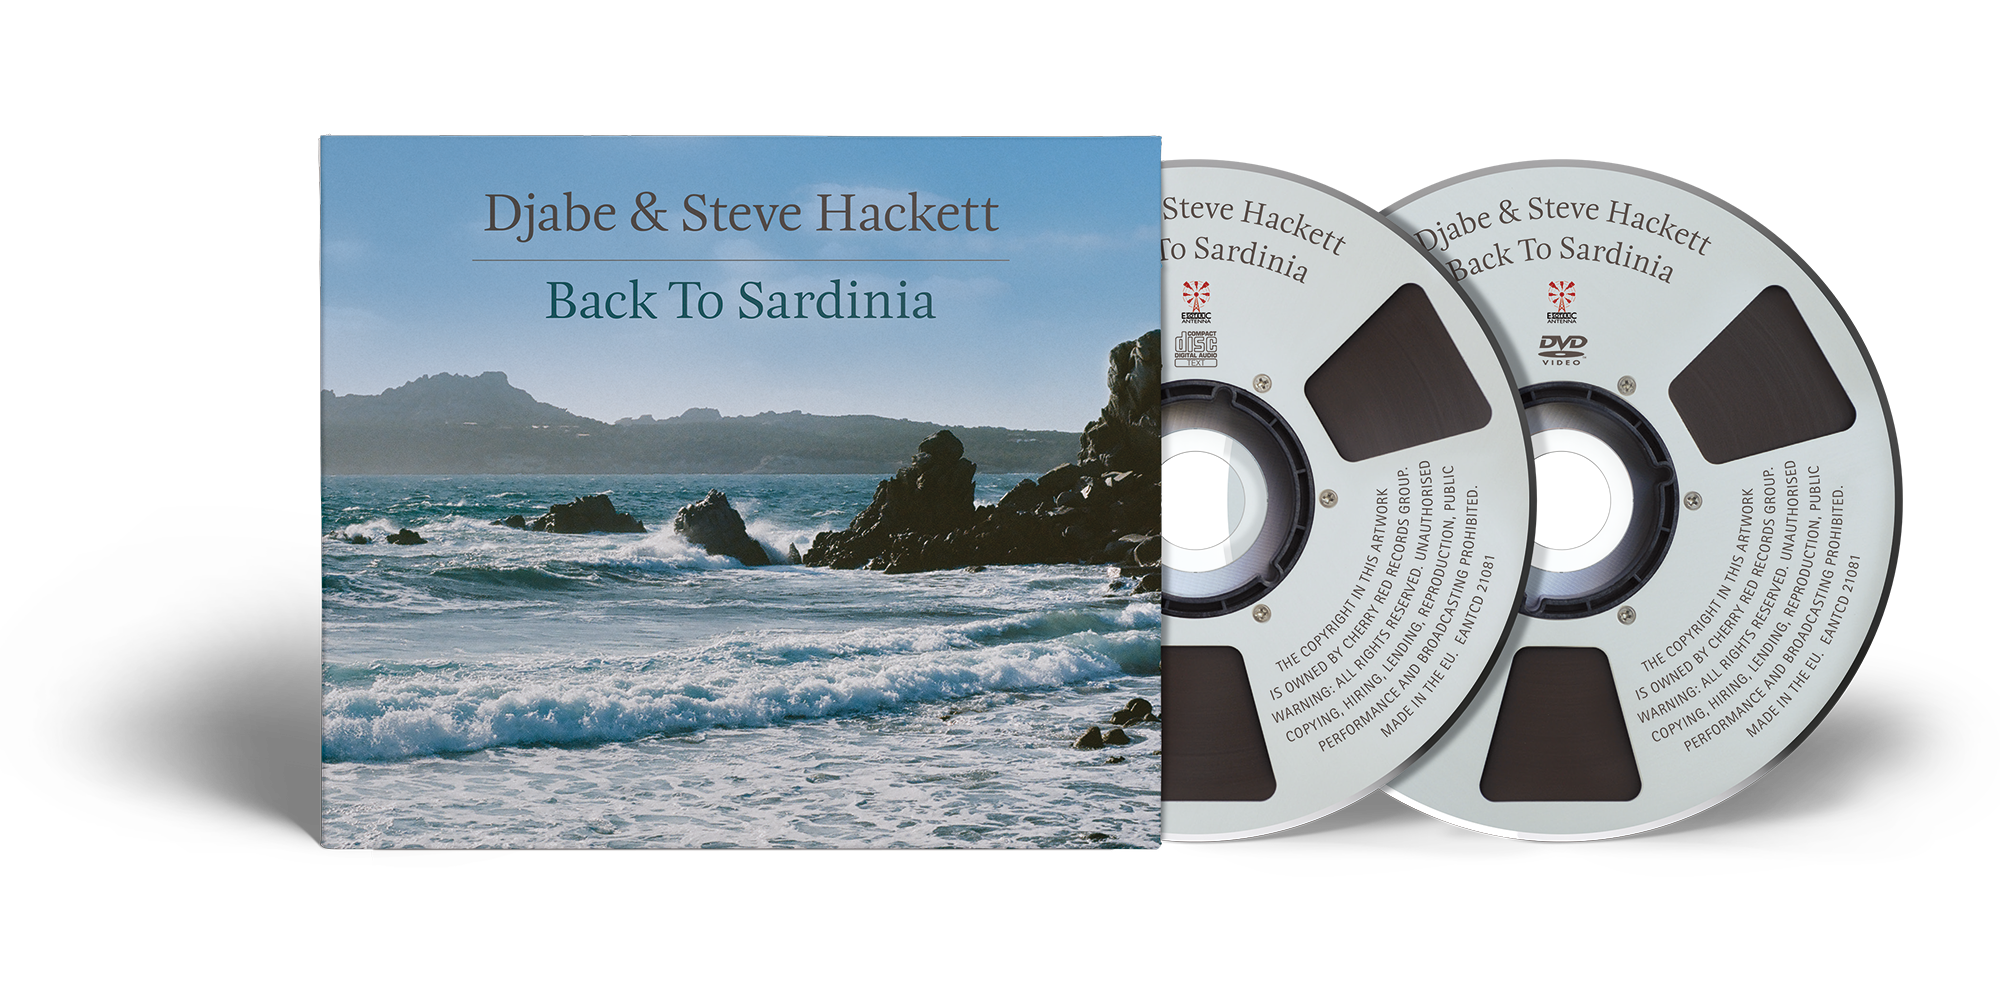 Djabe & Steve Hackett: Back To Sardinia - CD/DVD